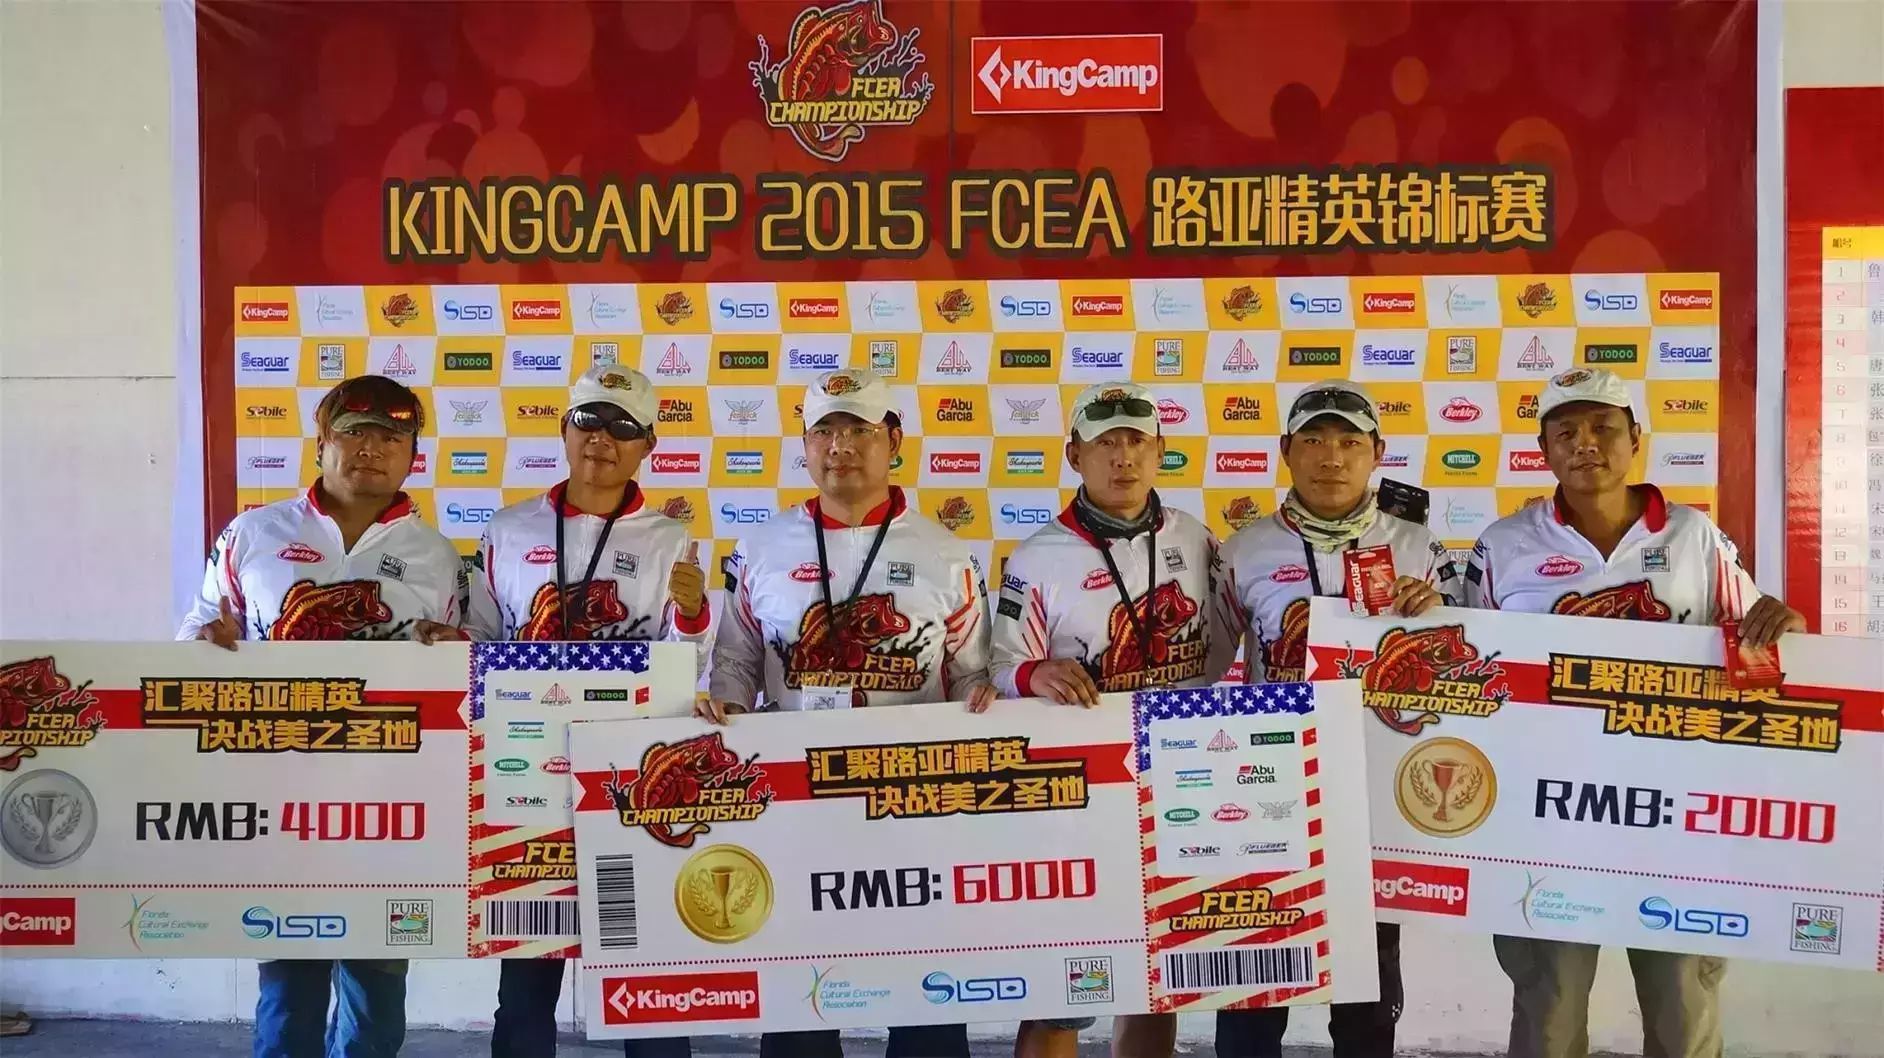 KingCamp 2015 FCEA 路亚精英锦标赛，四川红海 上演精彩收官Bass大战 ！